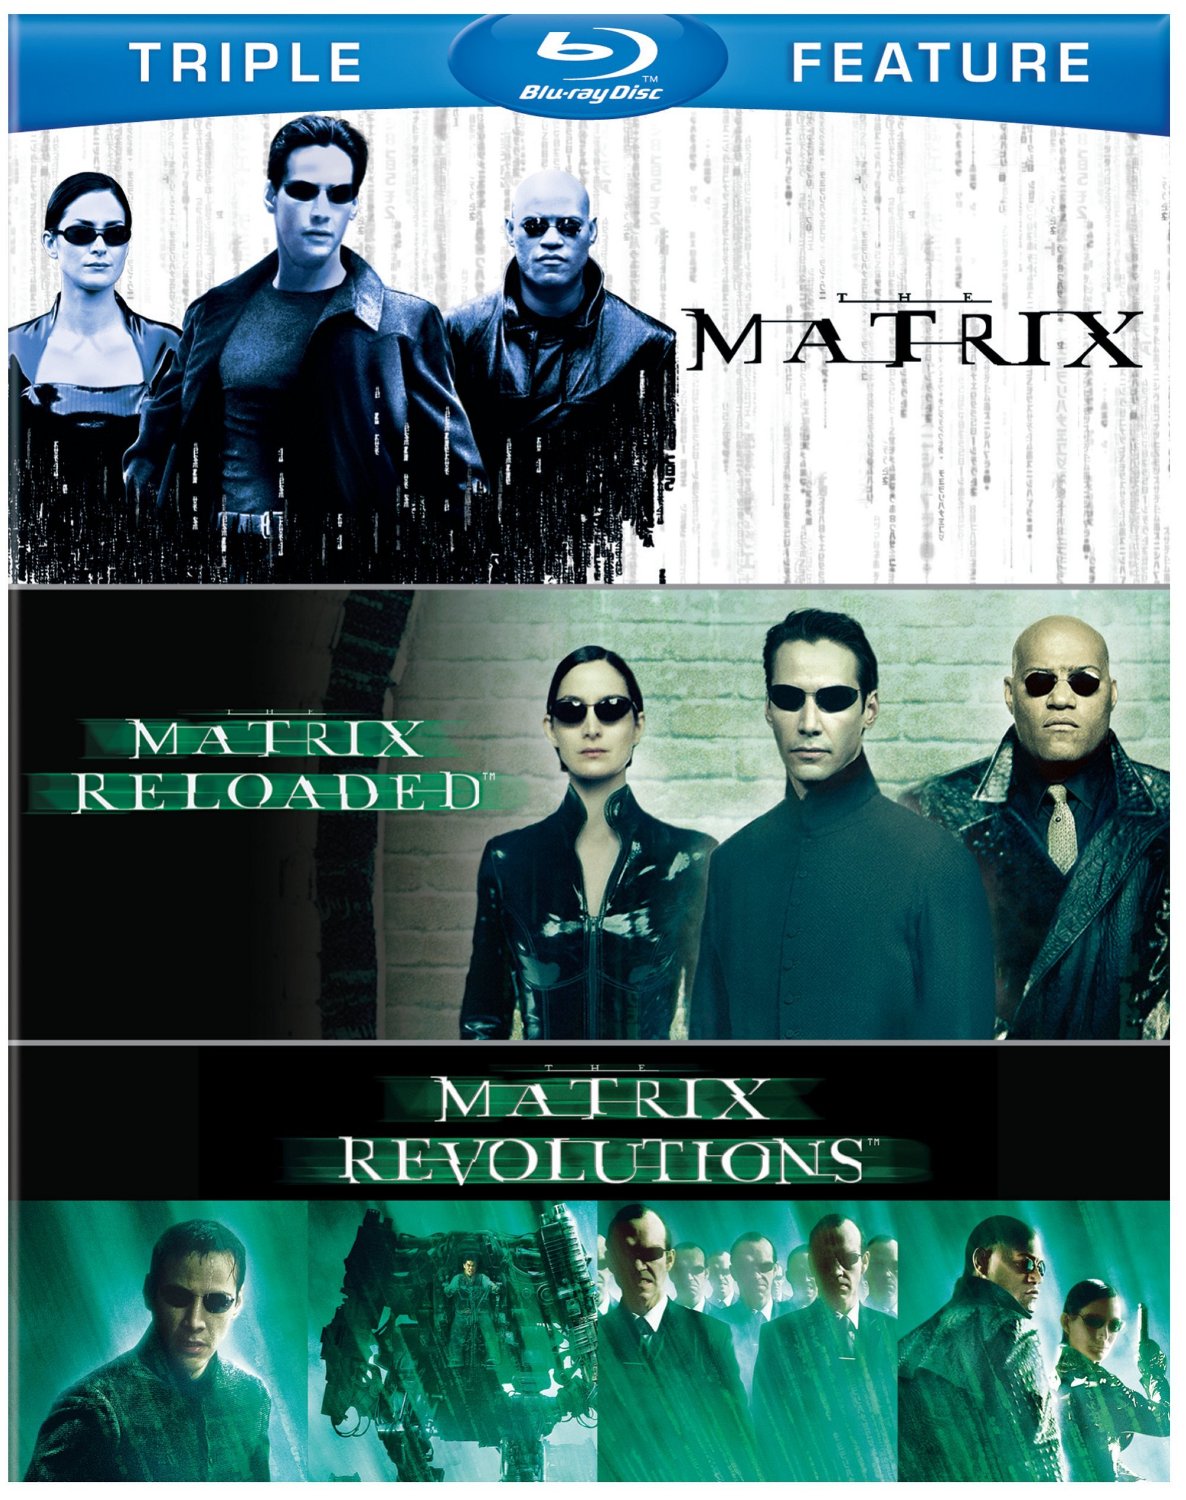 The Matrix Photo